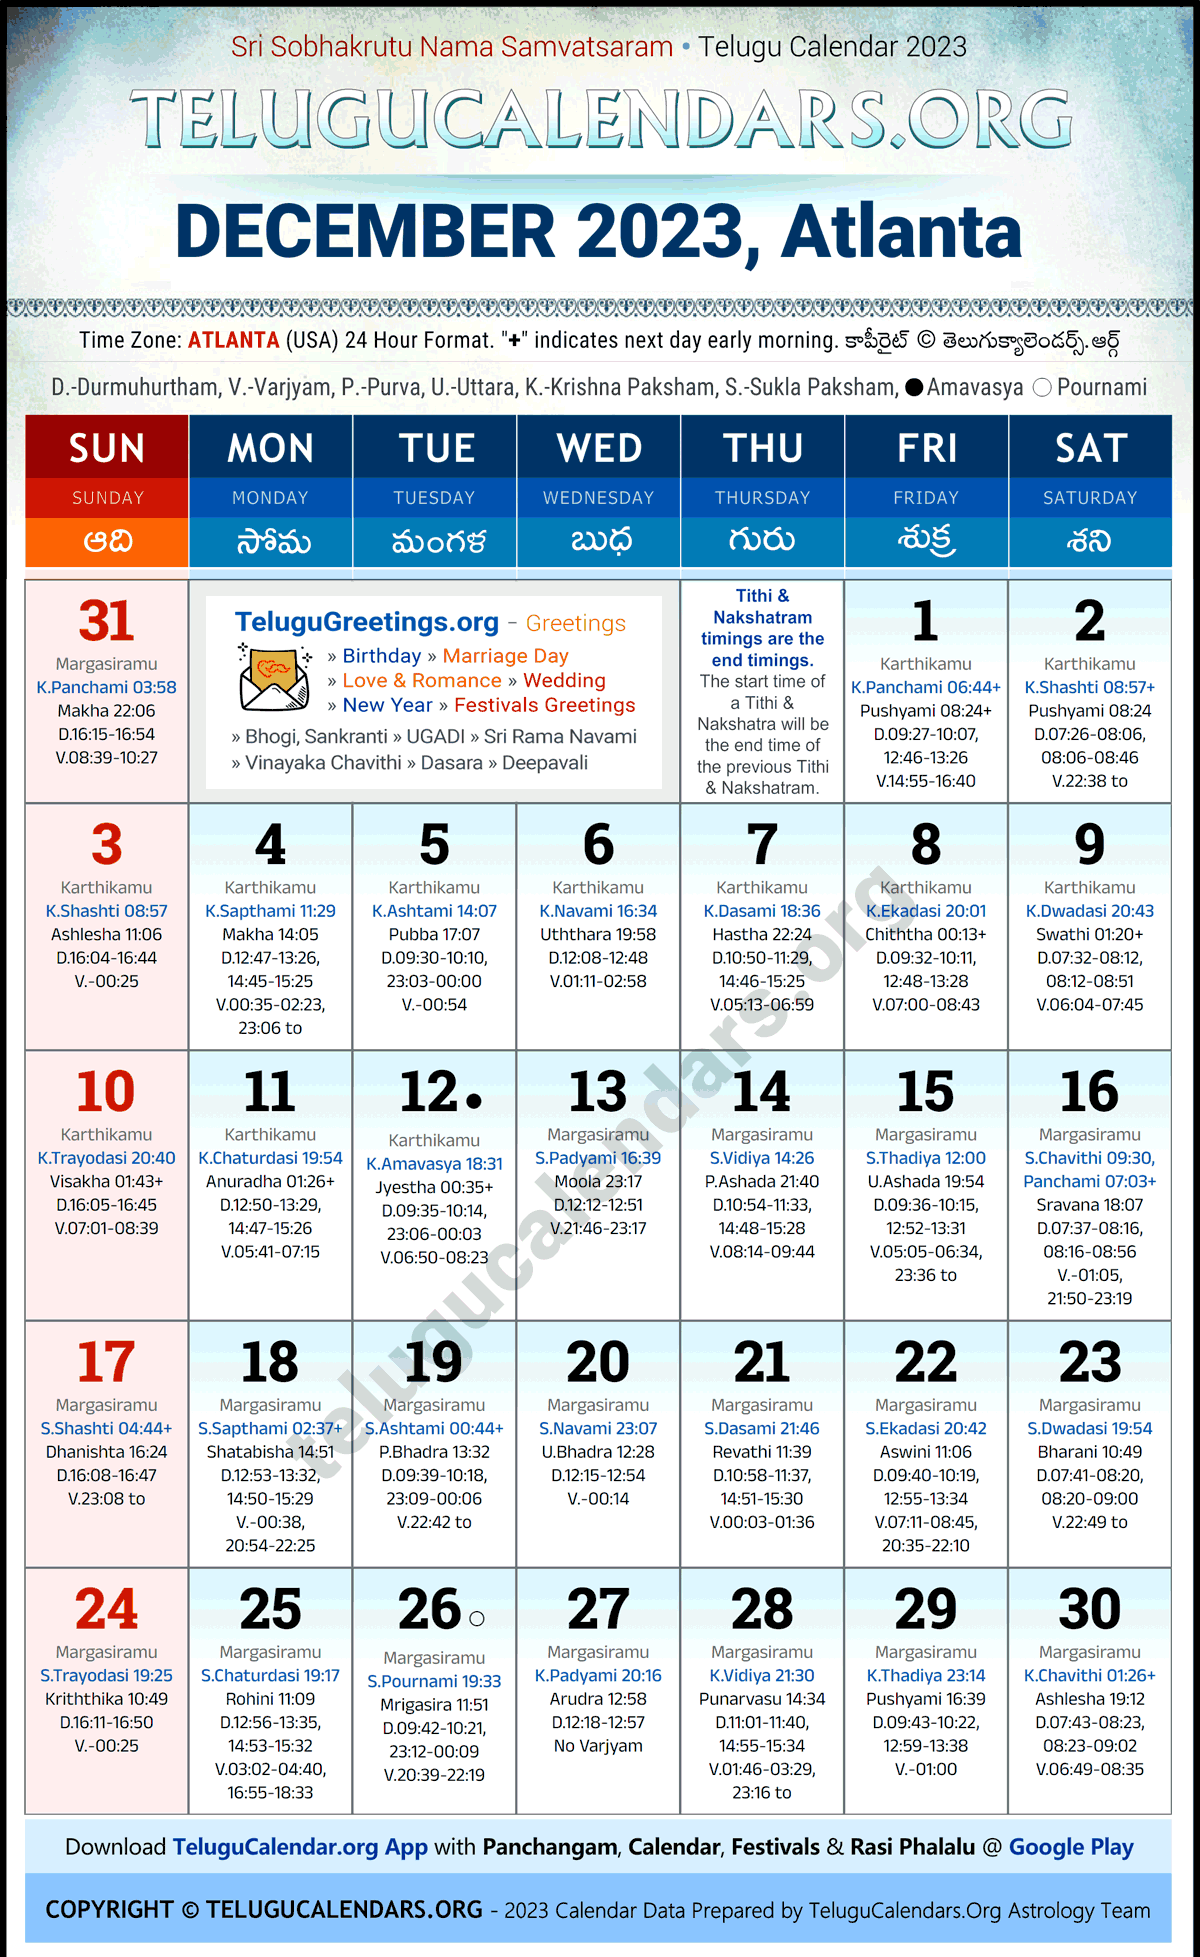 Telugu Calendar 2023 December Festivals for Atlanta